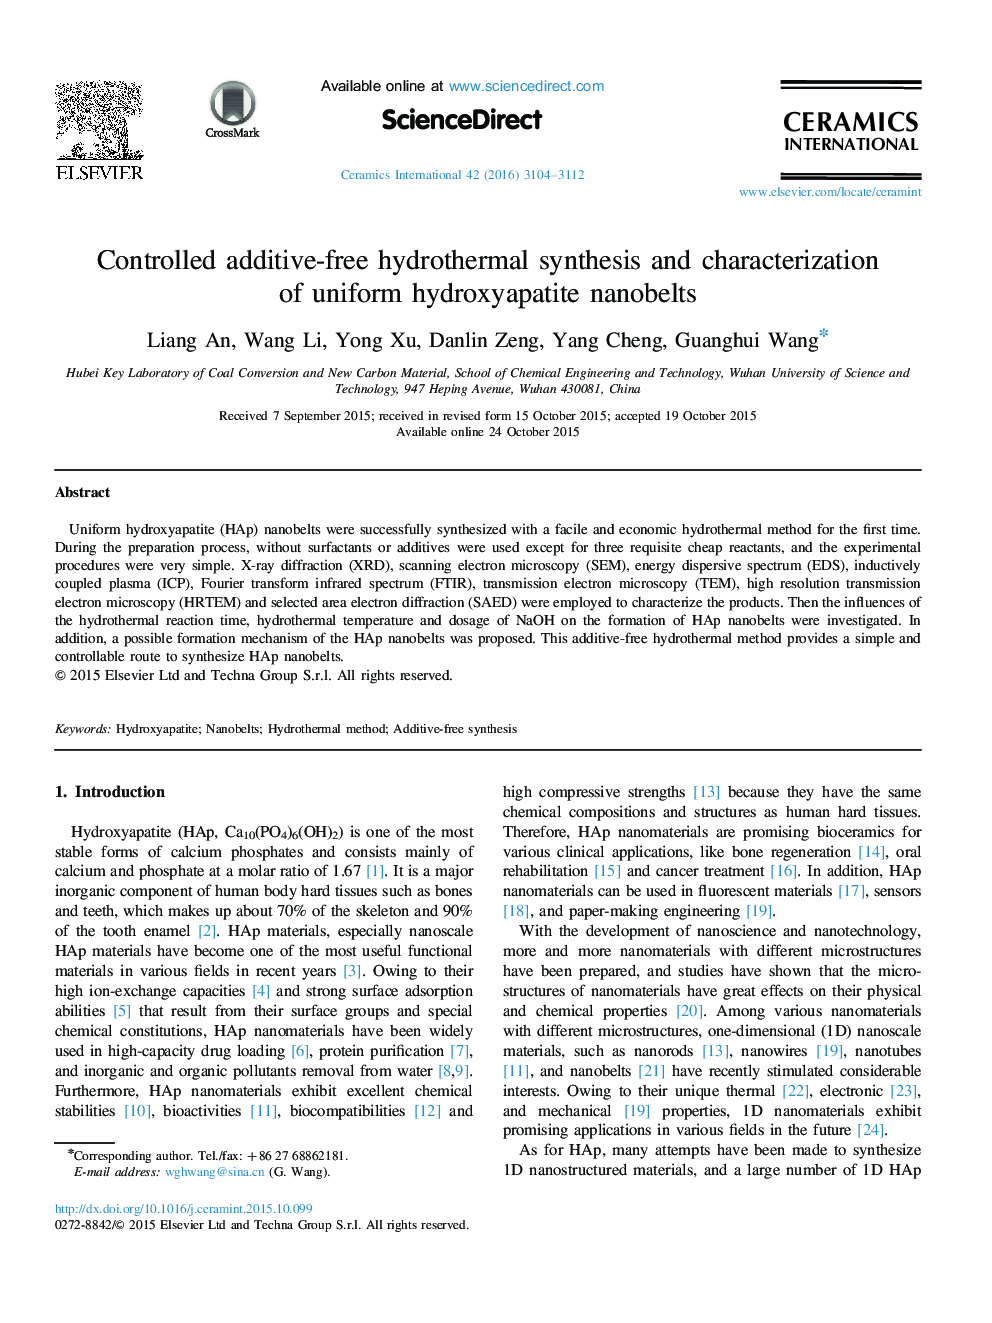 Controlled additive-free hydrothermal synthesis and characterization of uniform hydroxyapatite nanobelts